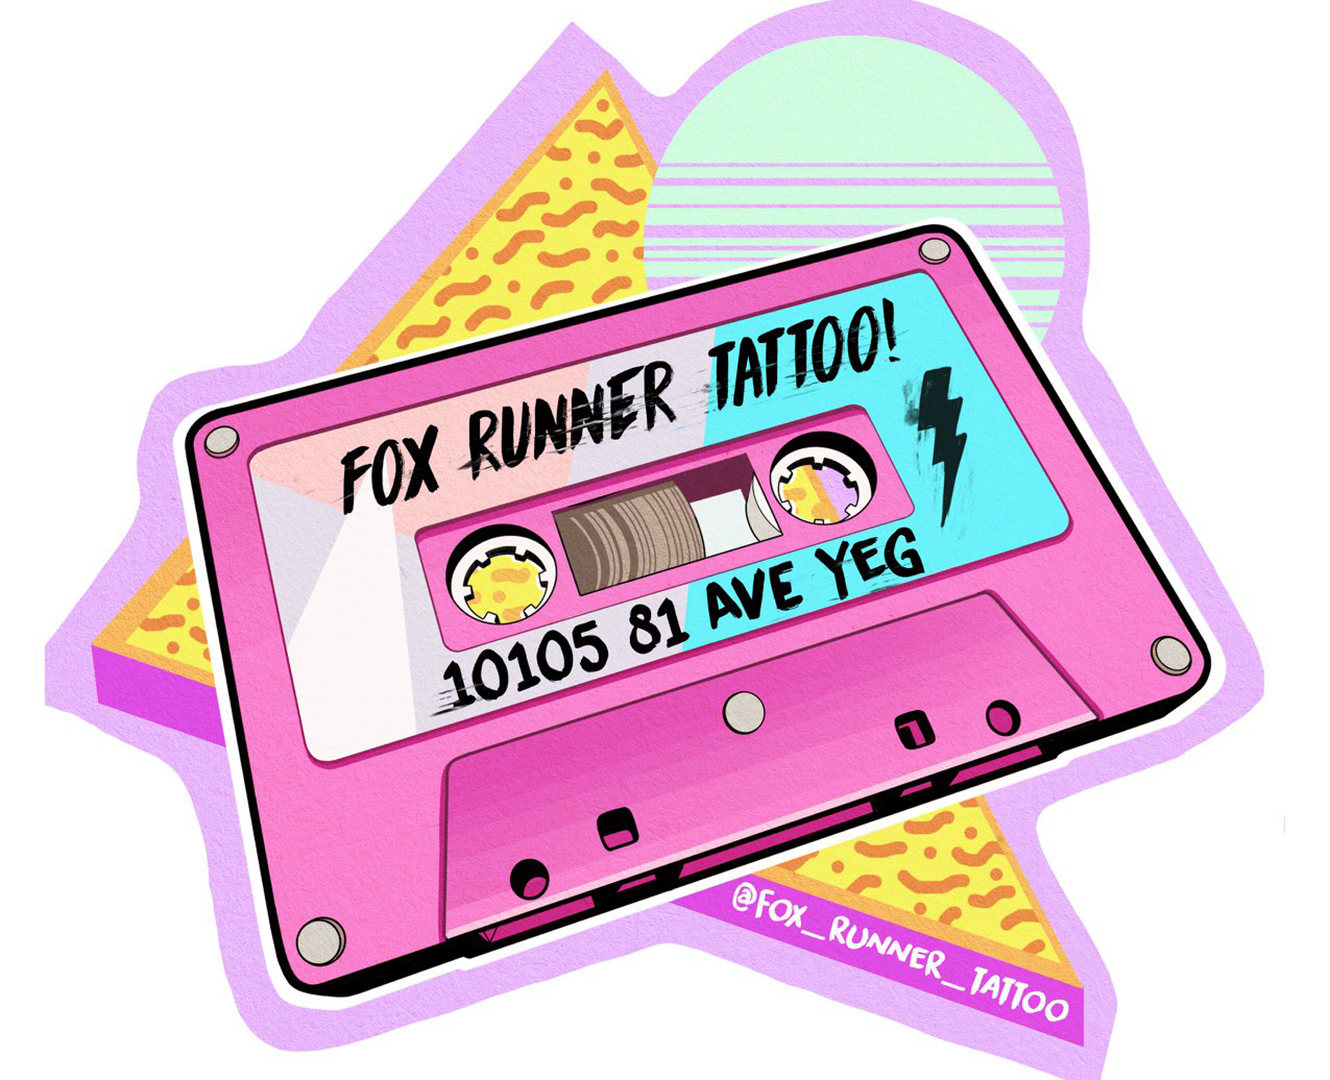 Fox runner tattoo studio logo